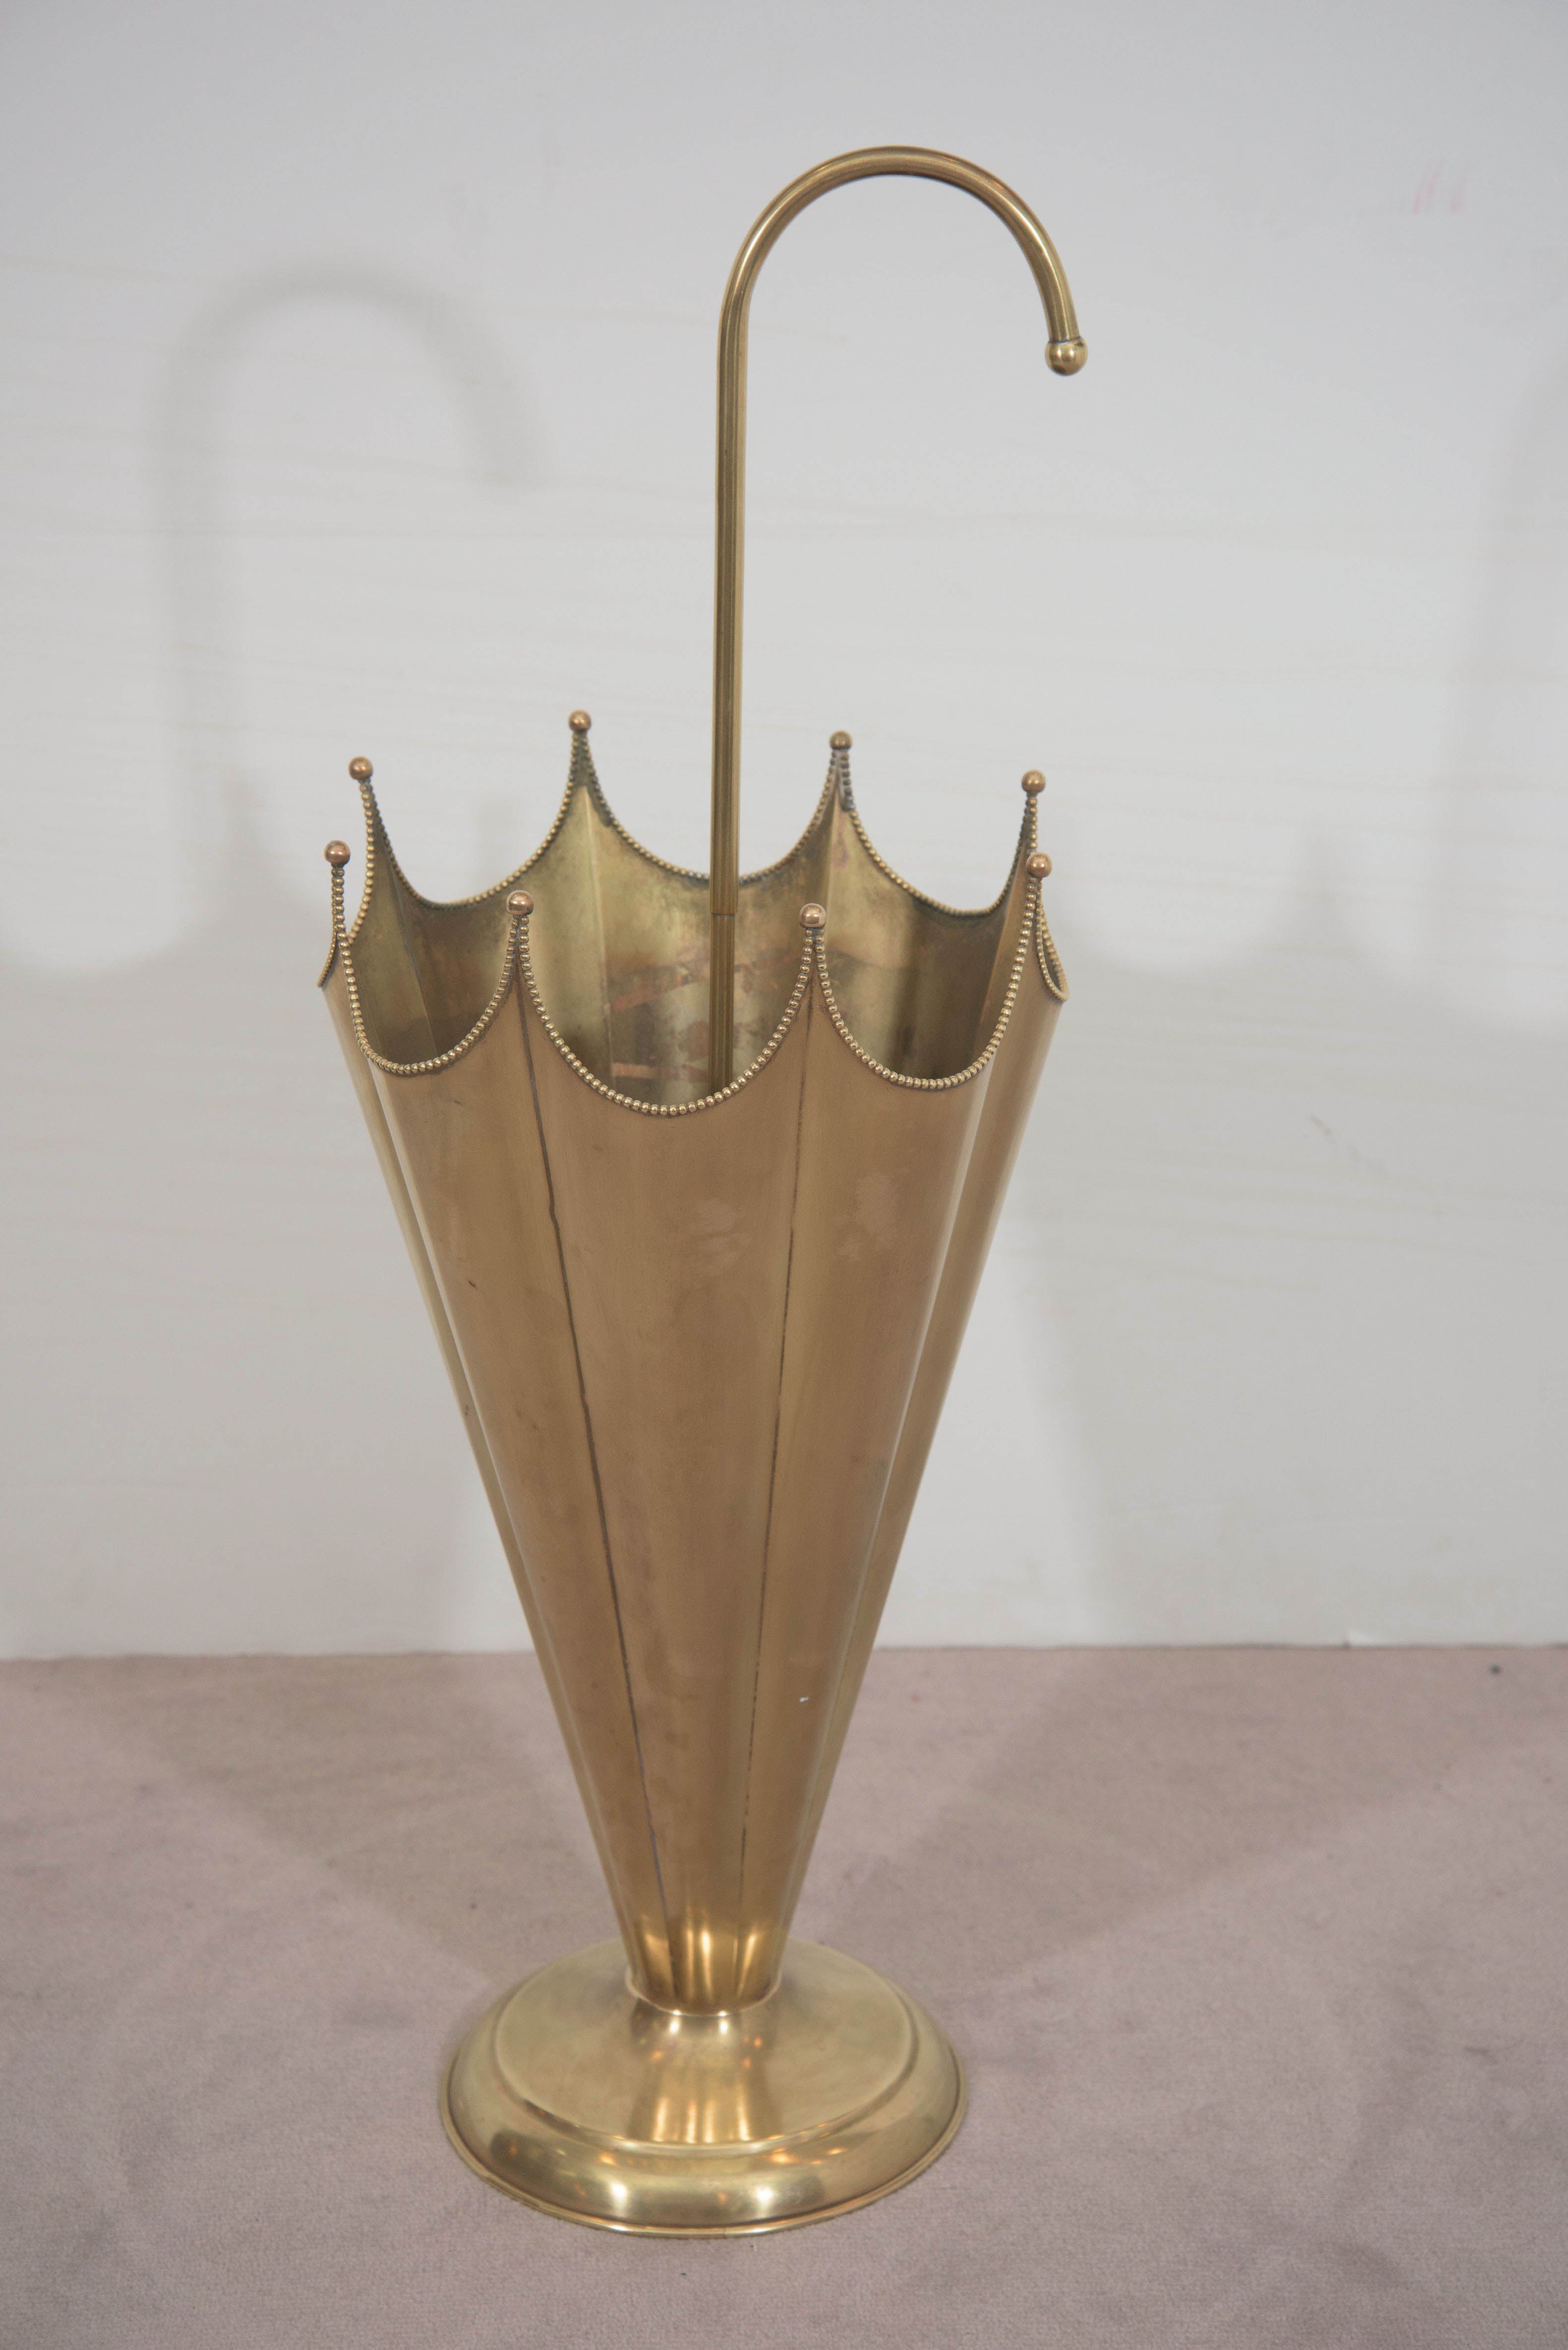 Italian Midcentury Brass Umbrella Stand